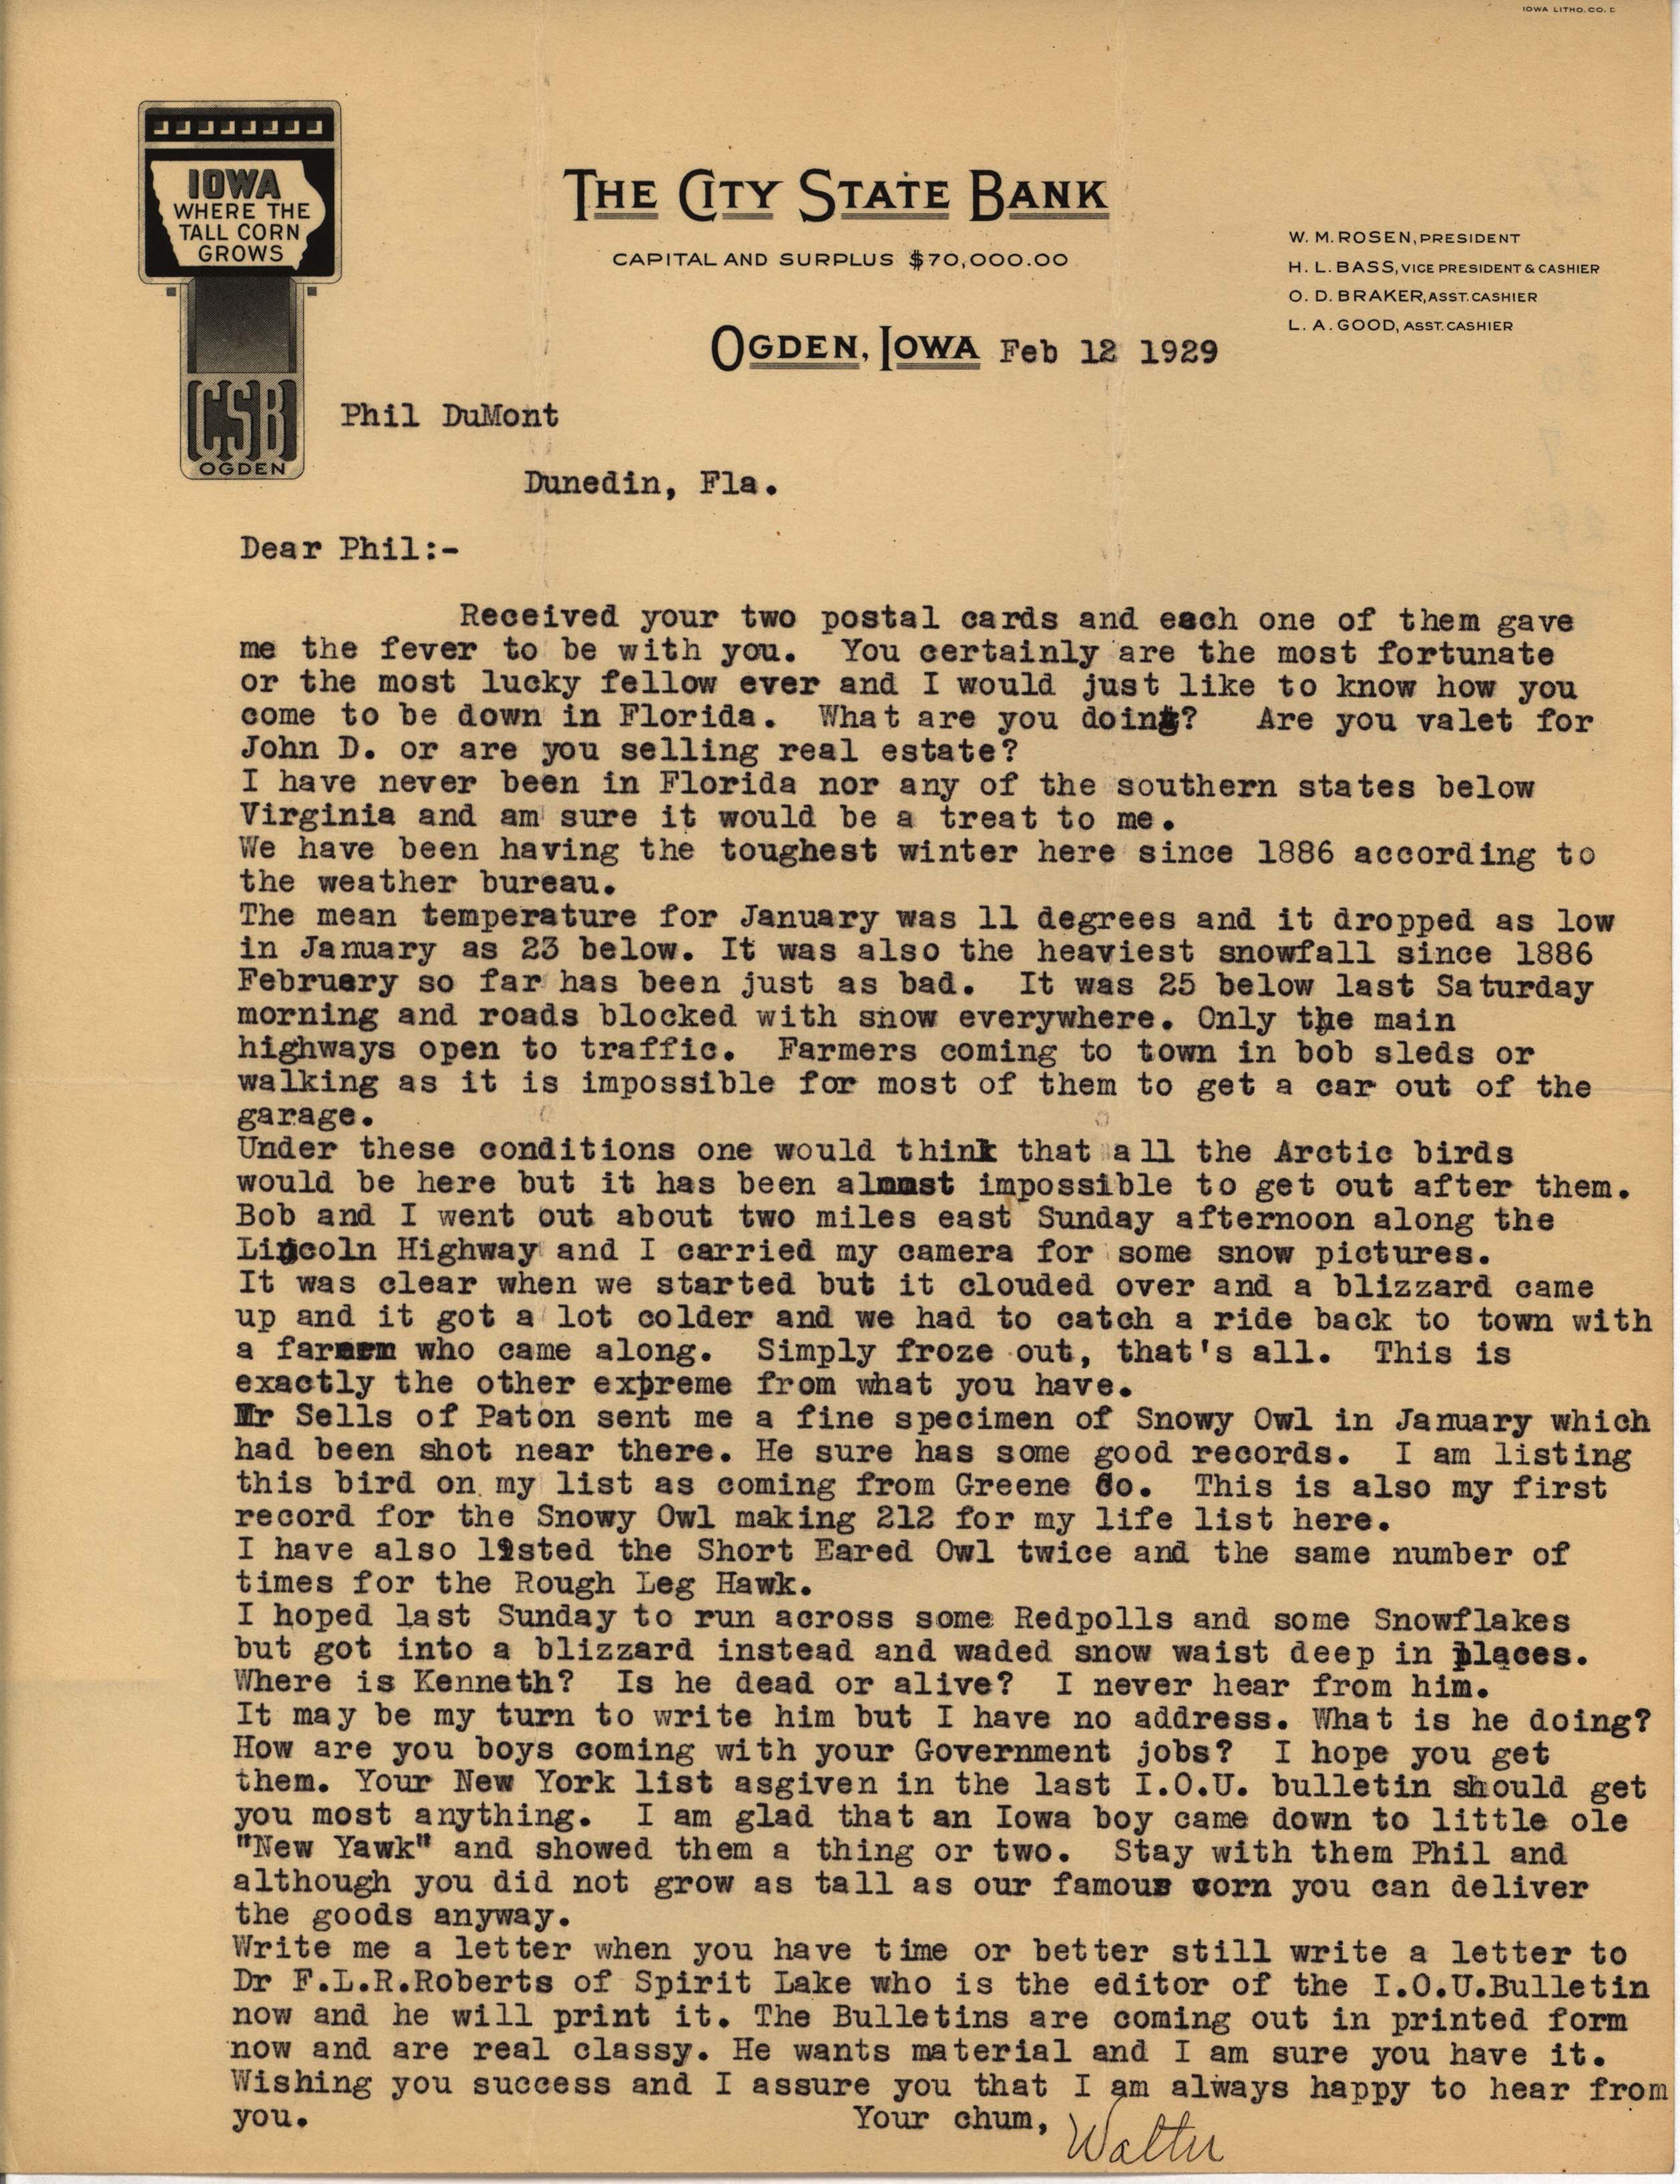 Walter Rosene letter to Philip DuMont regarding Iowa weather, February 12, 1929